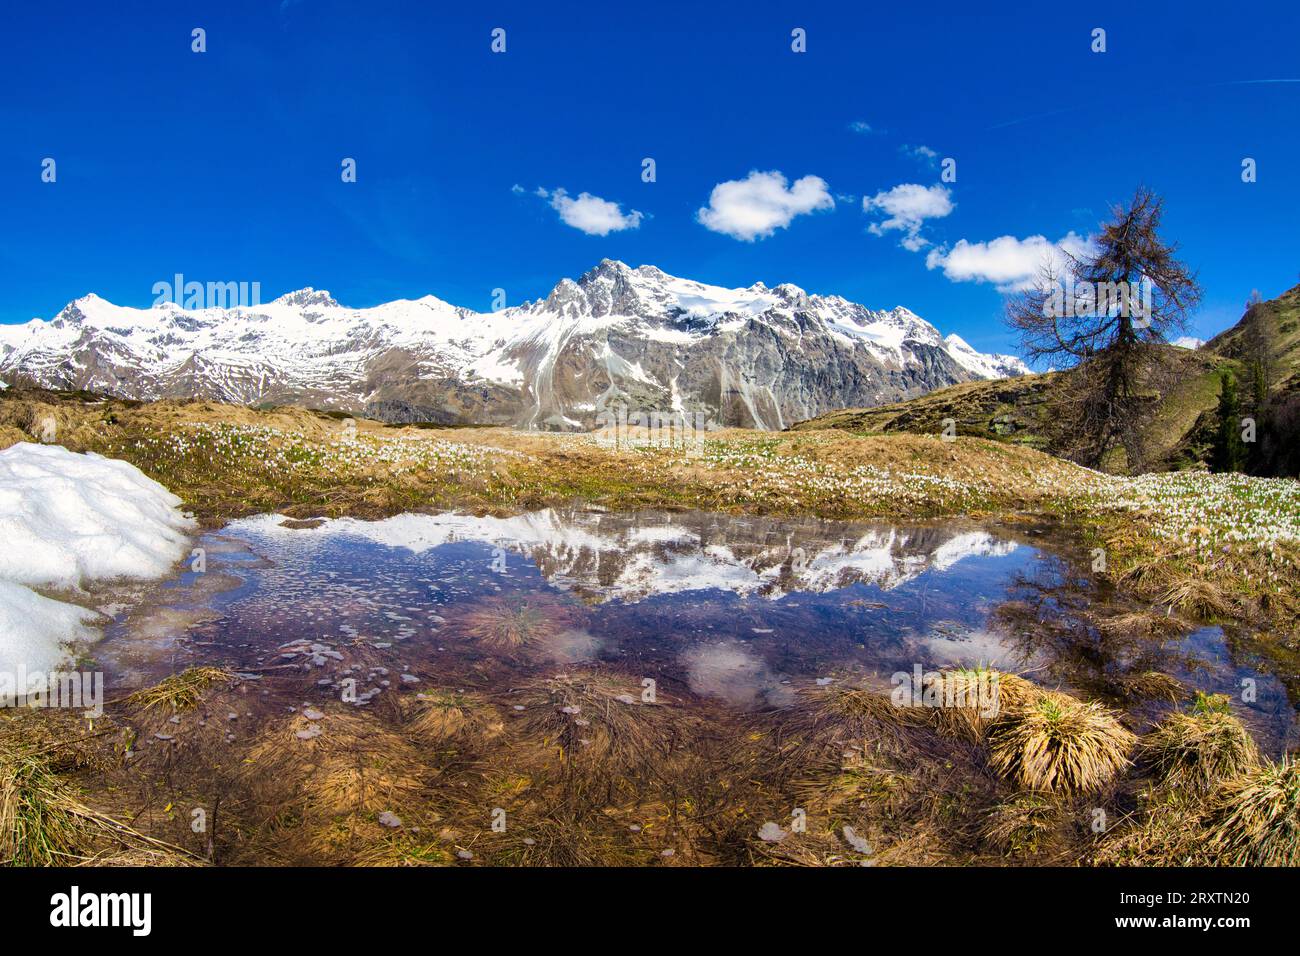 Snowcapped mountains reflected in a pristine lake in springtime, Fedoz valley, Bregaglia, Engadine, Canton of Graubunden, Switzerland, Europe Stock Photo